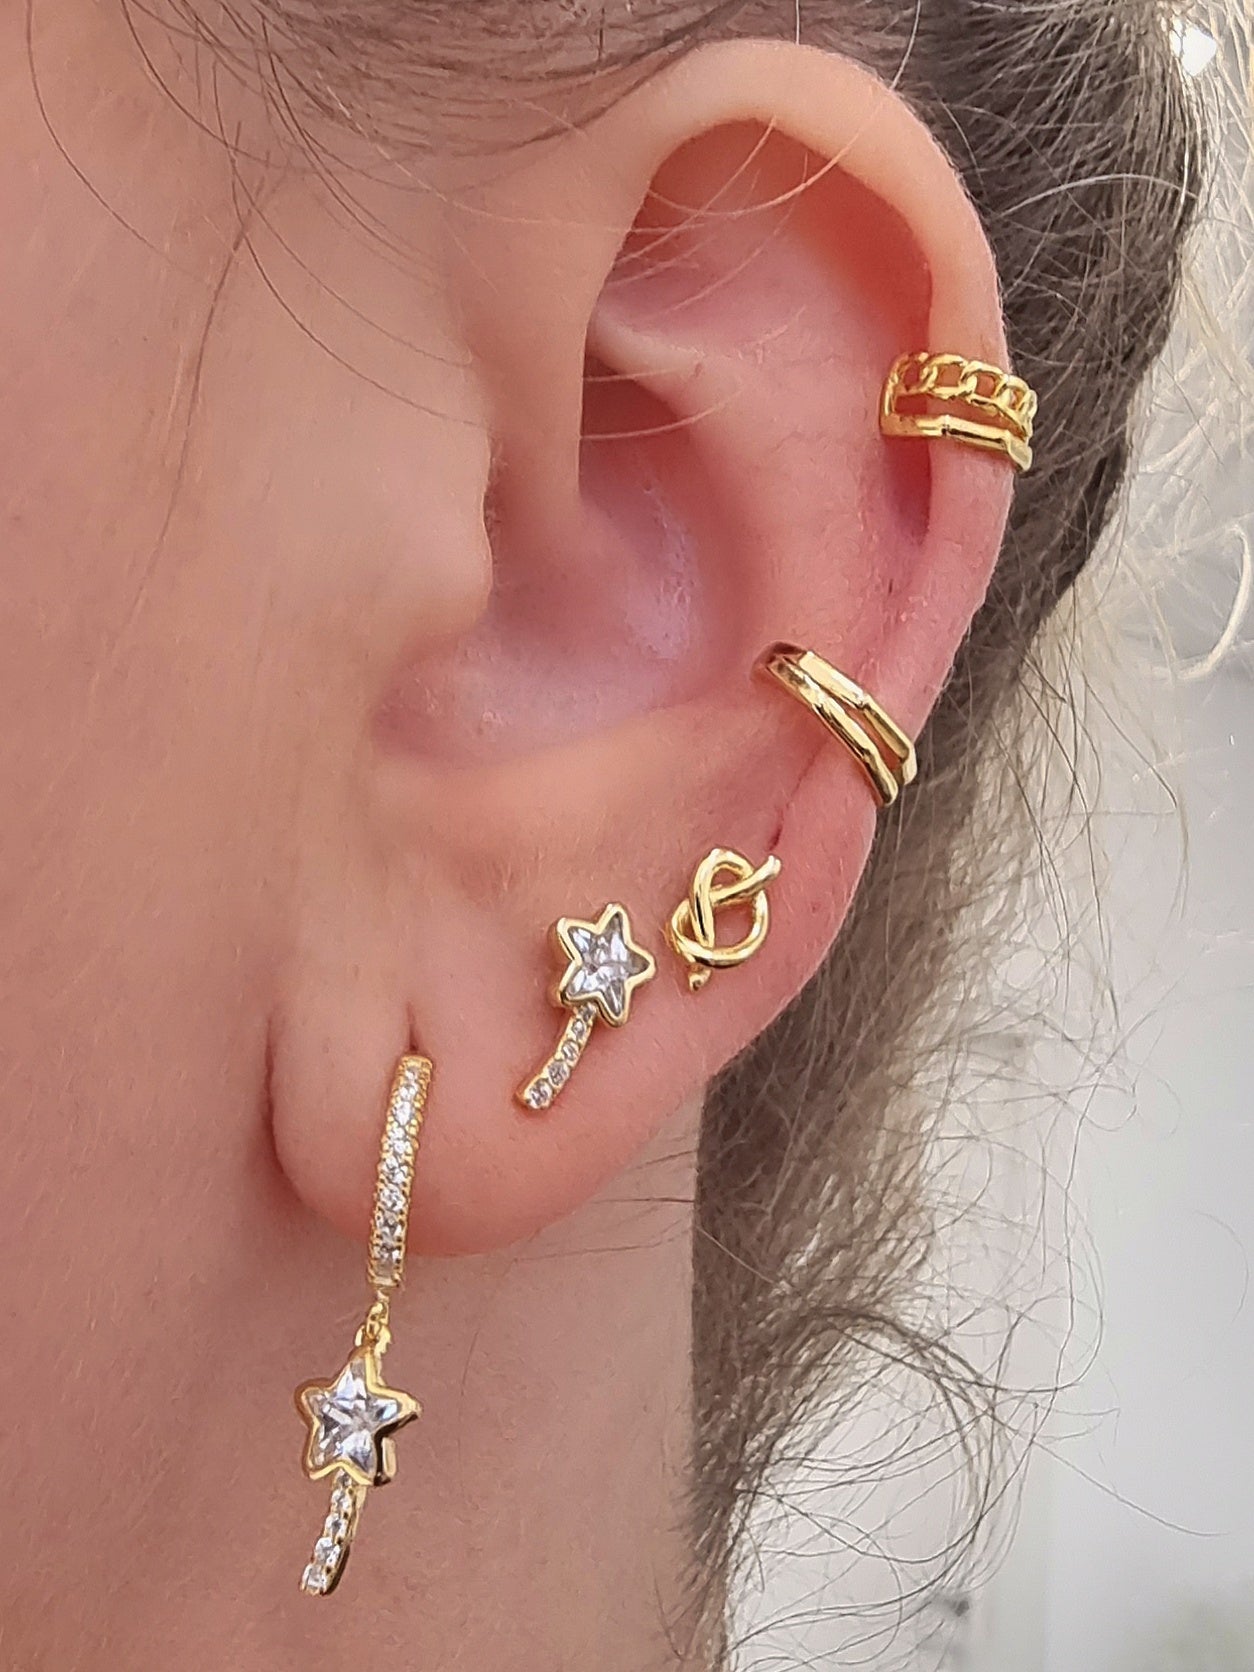 Silver huggie earrings with magic wand charms